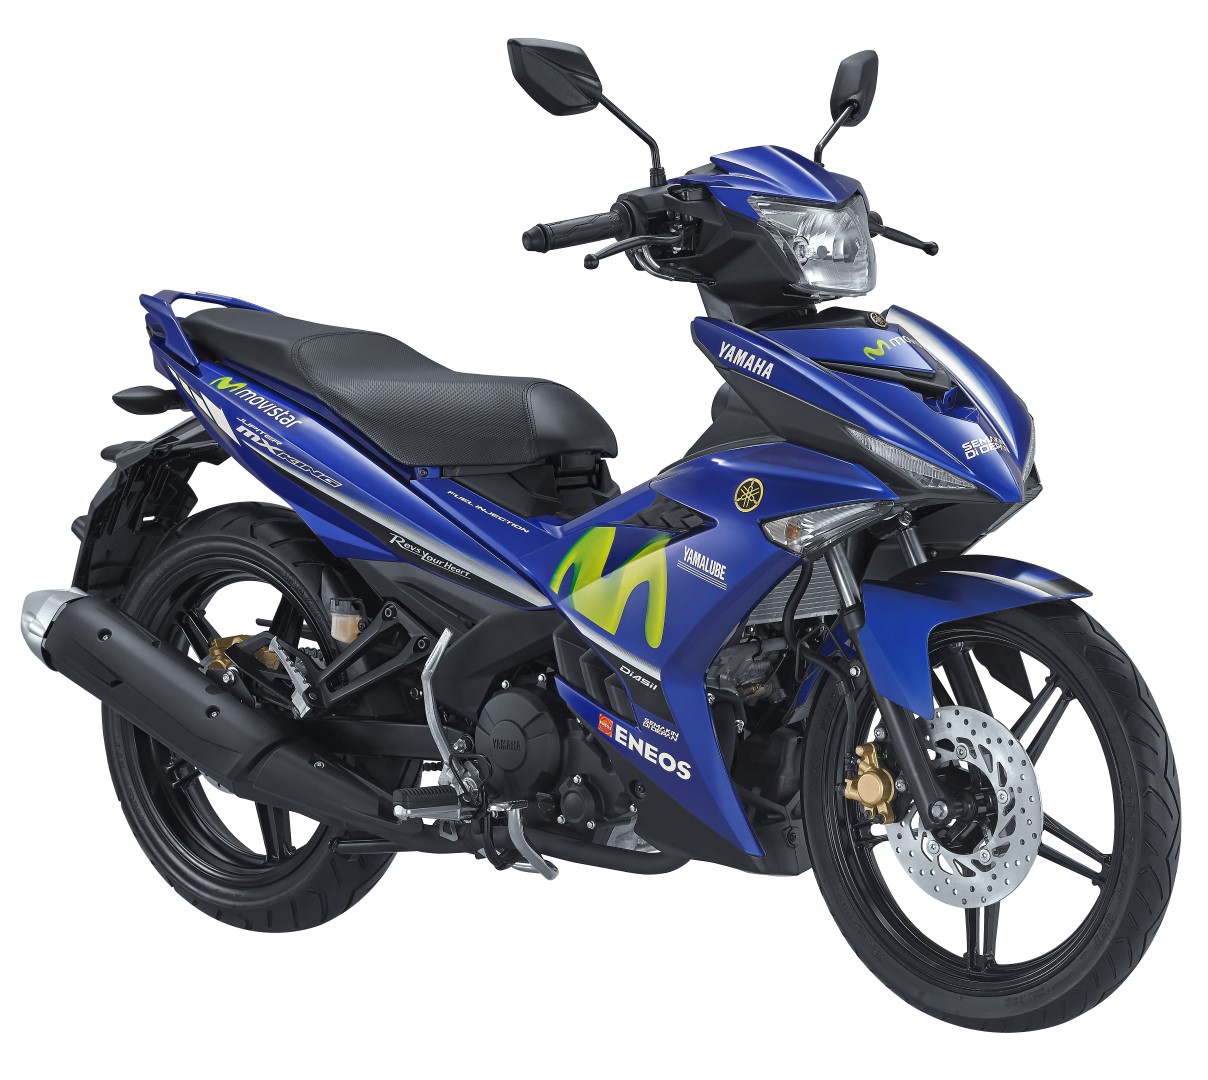 Yamaha MX-King Malaysia